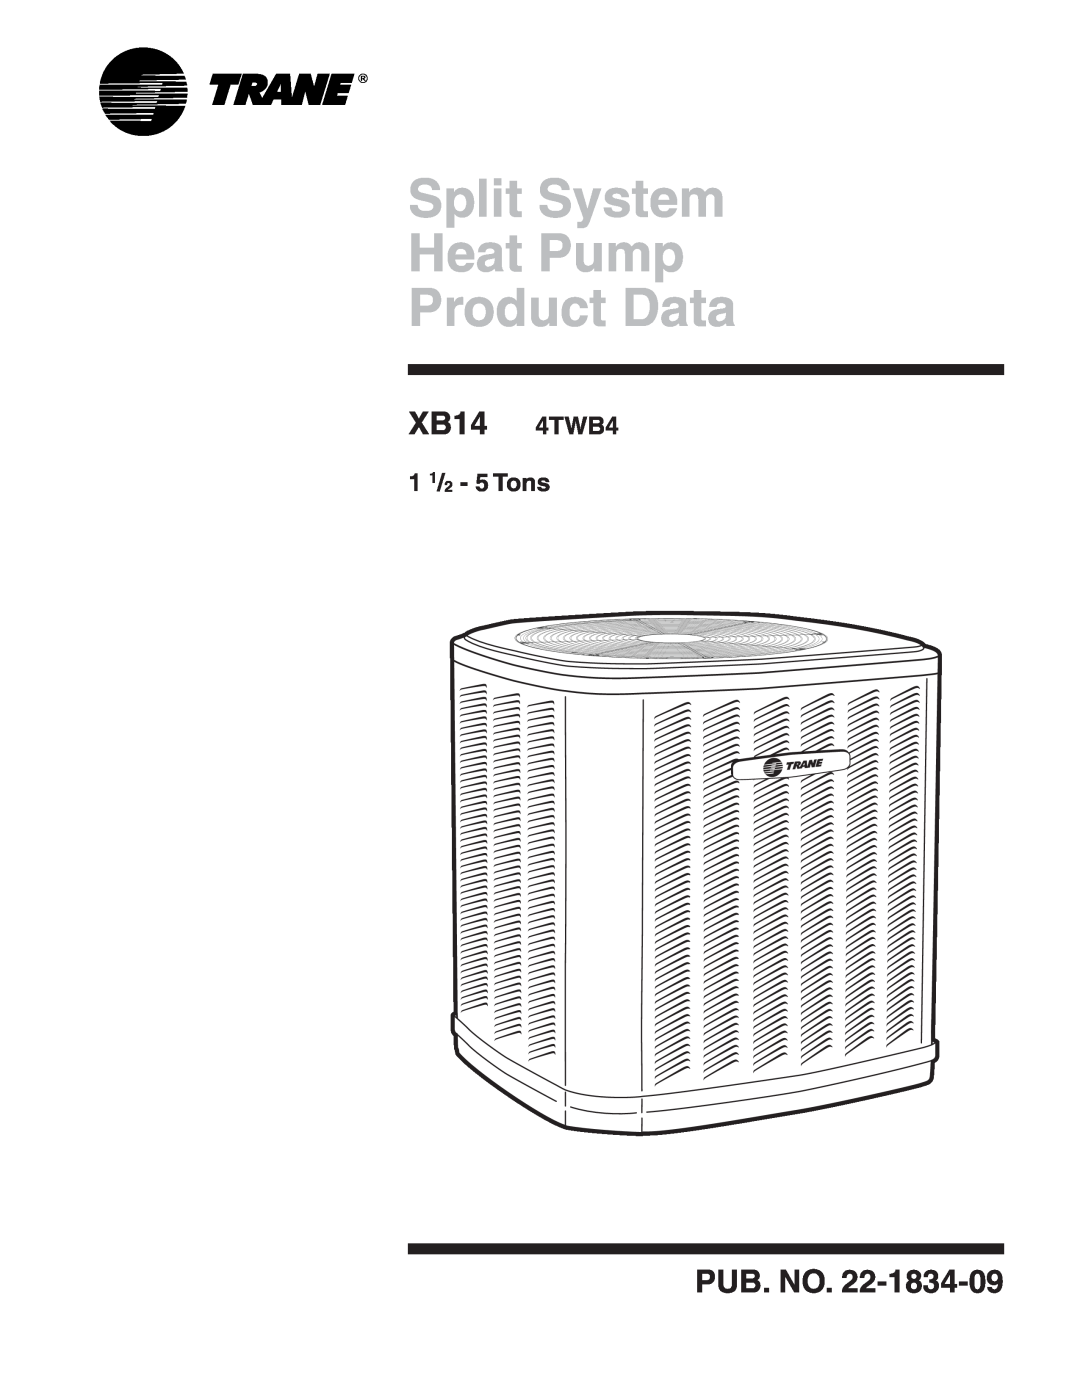 Trane manual Split System Heat Pump Product Data, XB14 4TWB4, Pub. No, 1 1/2 - 5 Tons 